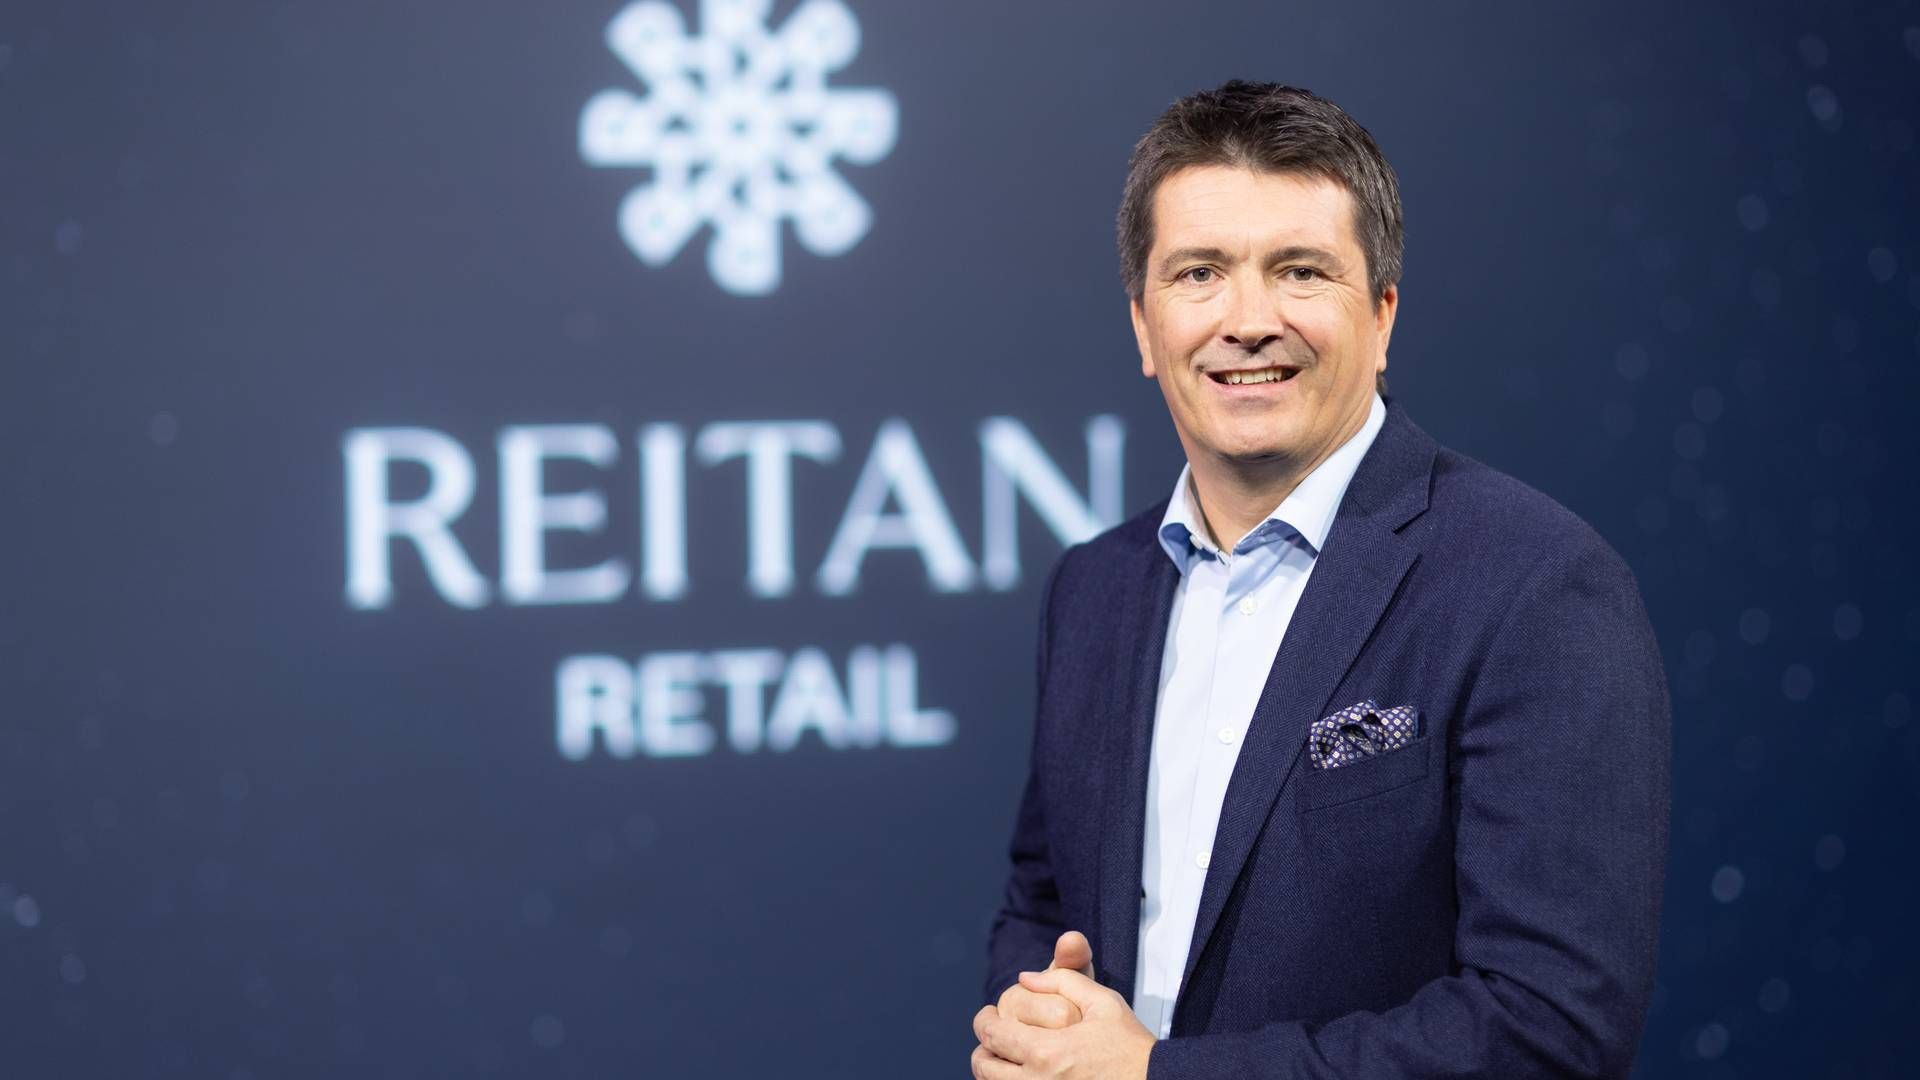 Ole Robert Reitan er søn af Retain-stifteren Odd Reitan og nuværende topchef i koncernen. | Foto: Øyvind Breivik